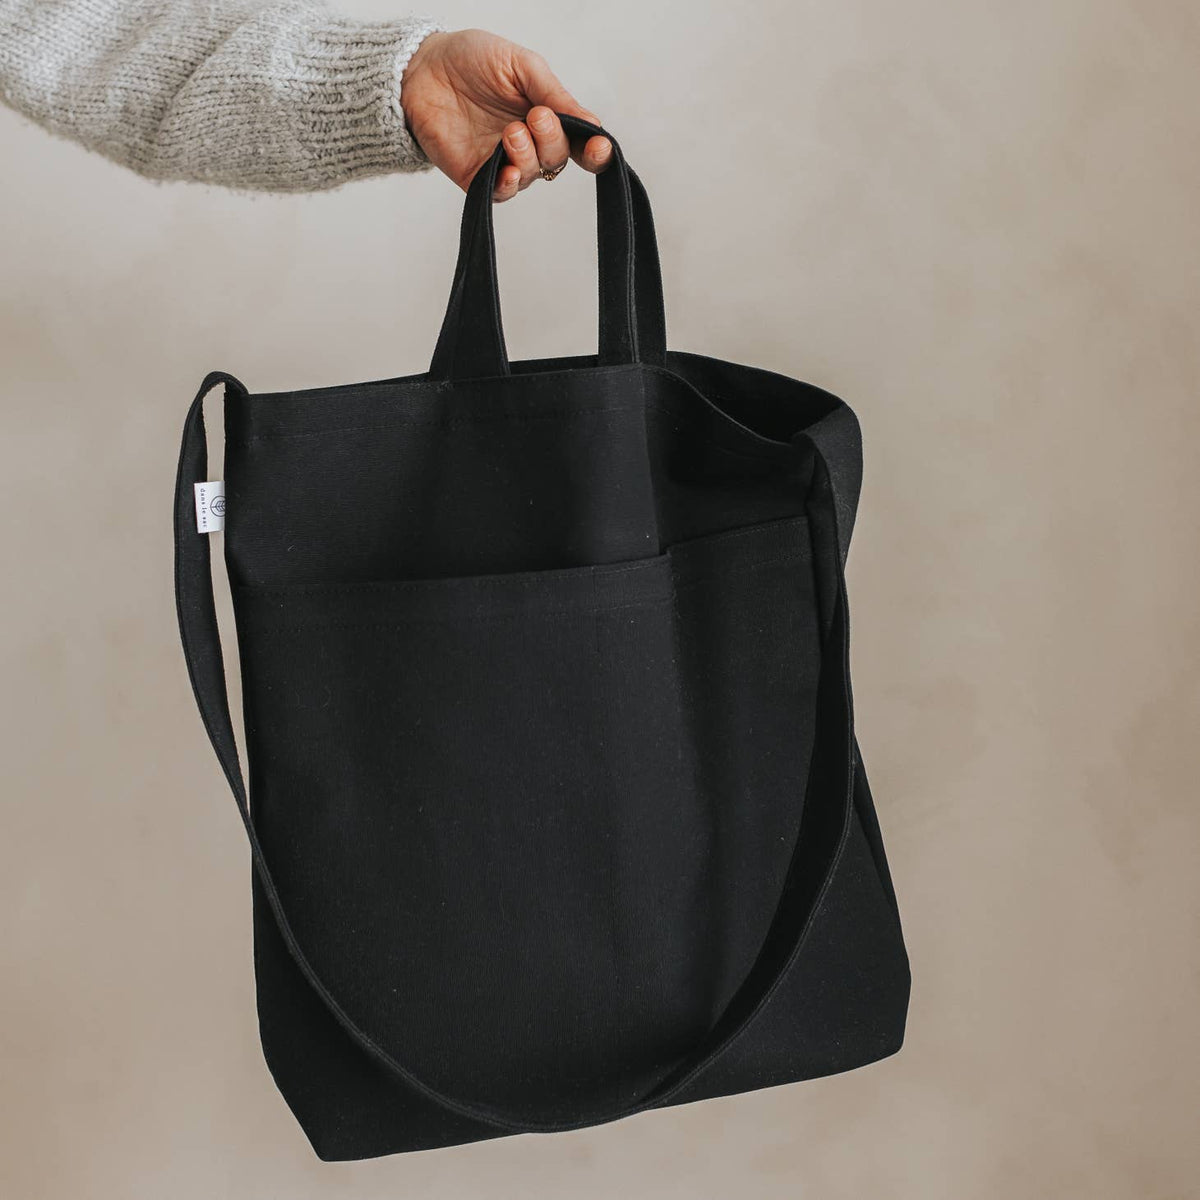 Double Pocket Tote Bag in Black